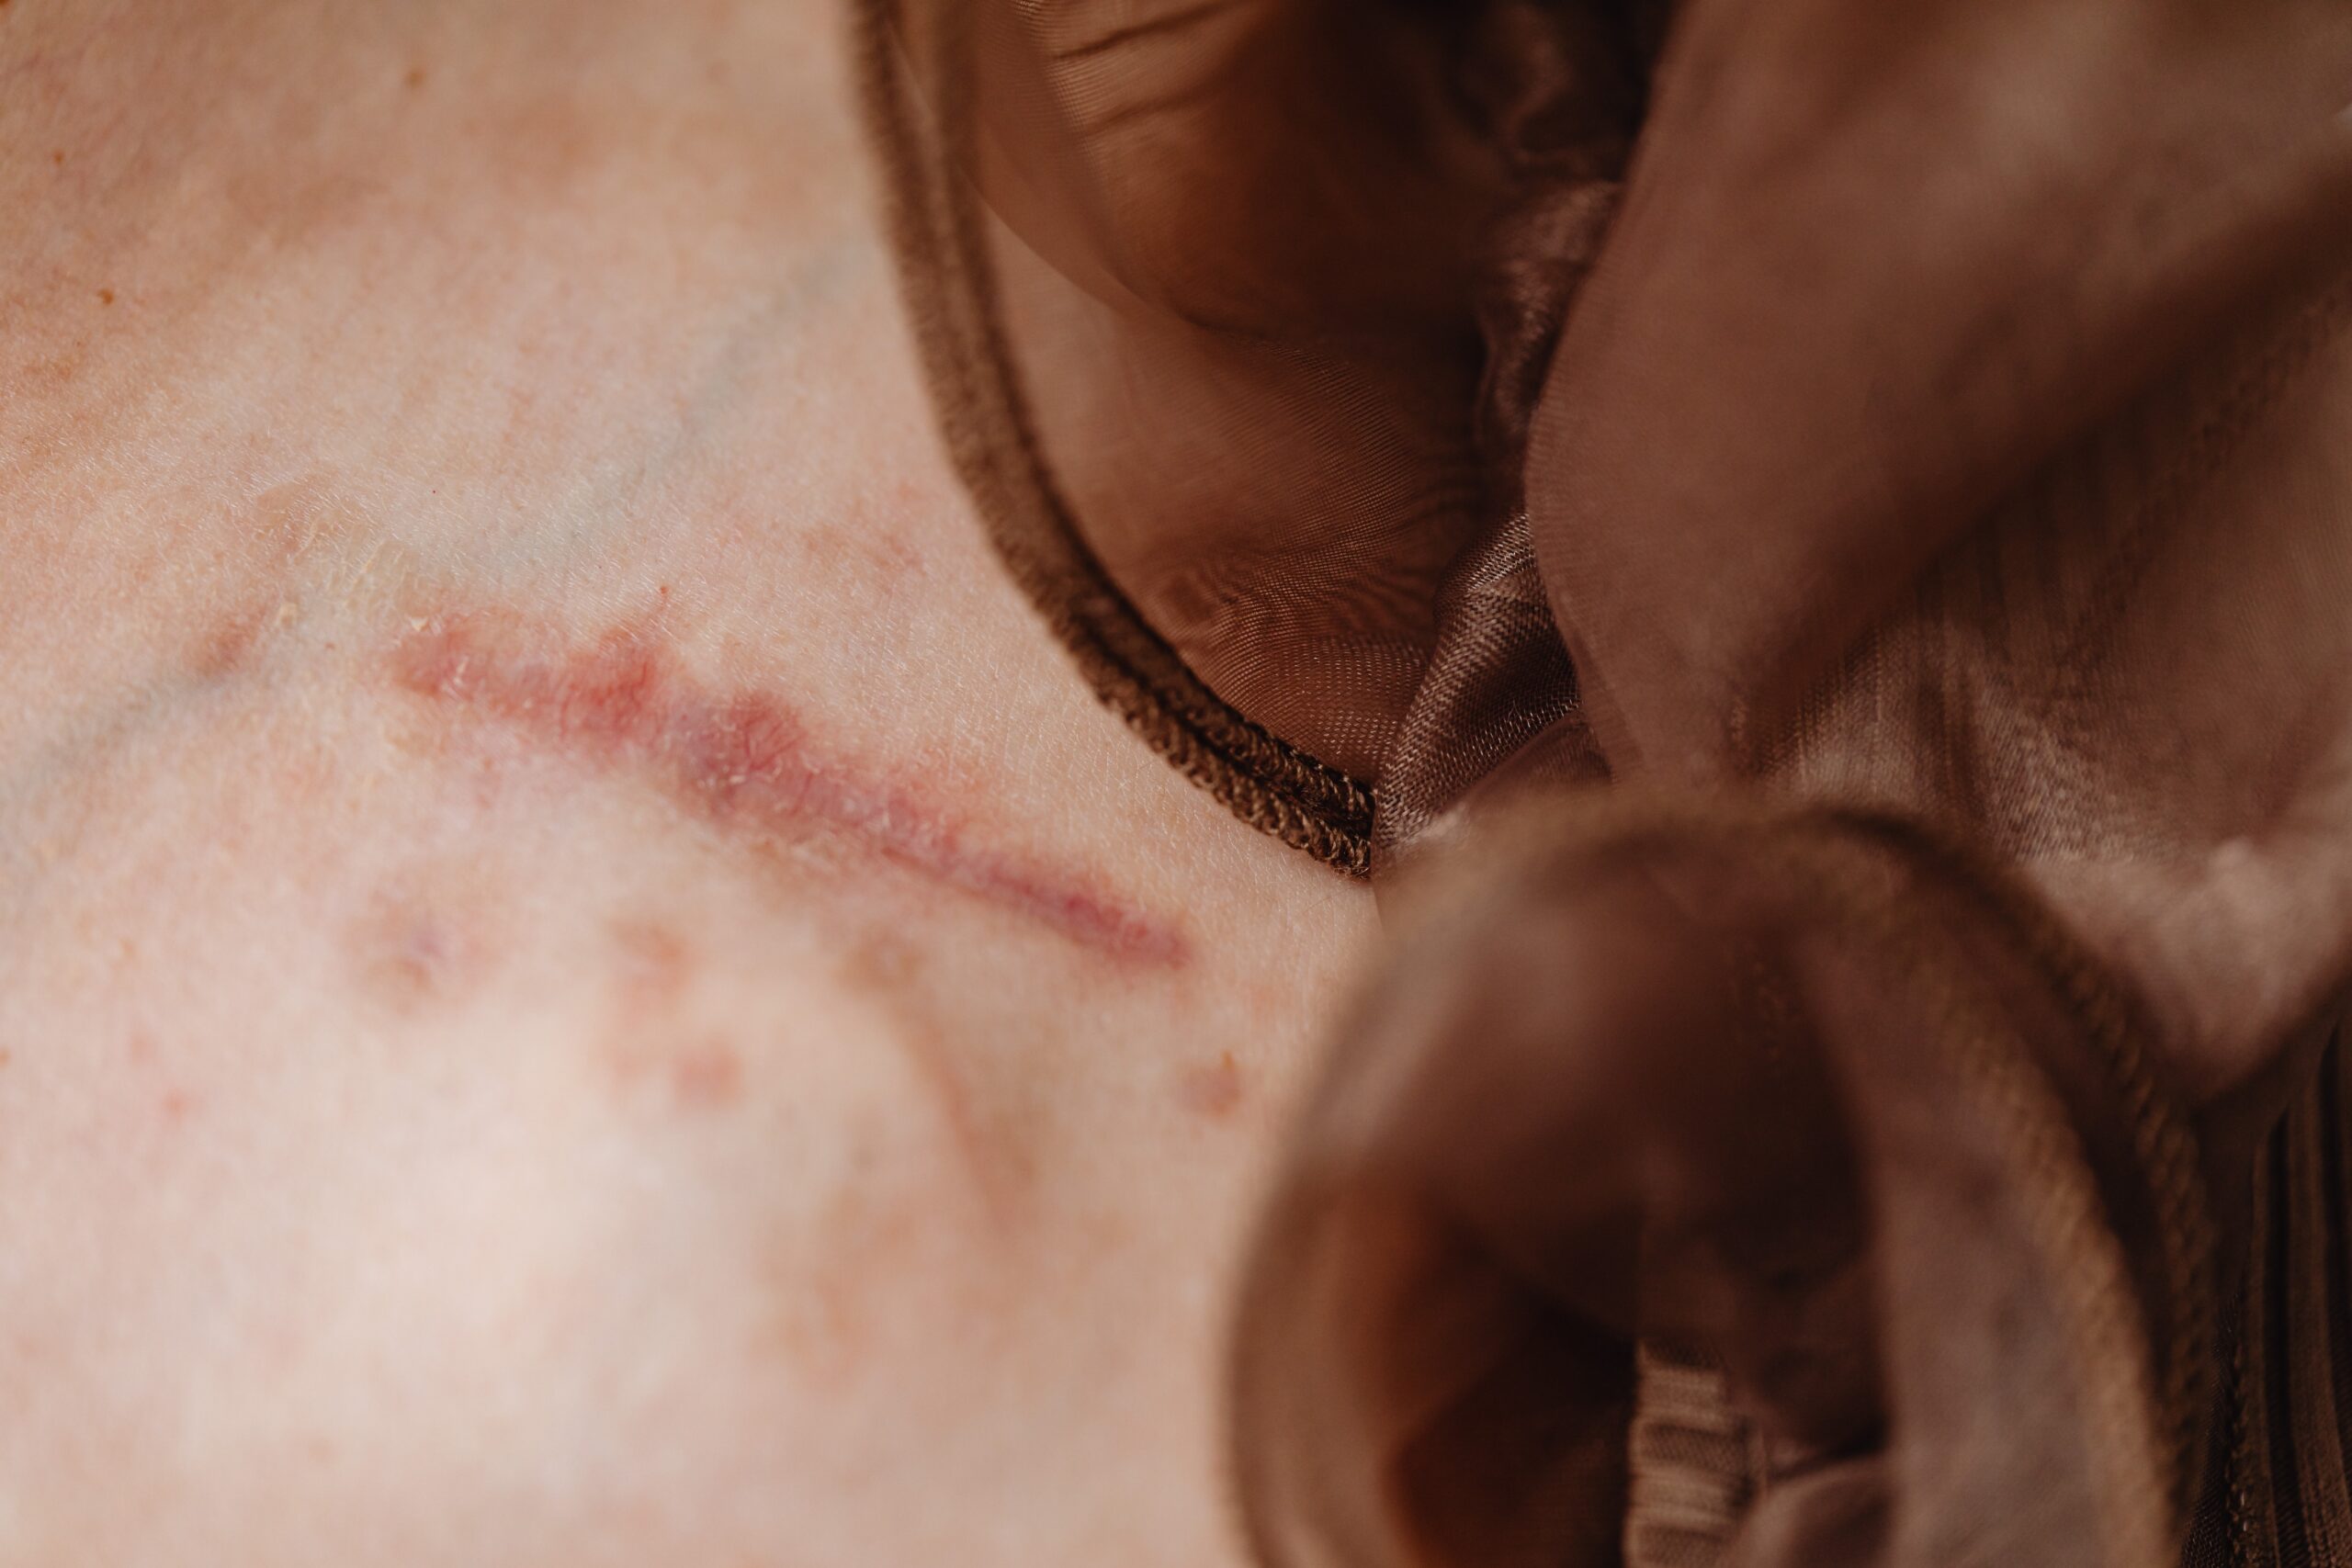 a close-up shot of a scar